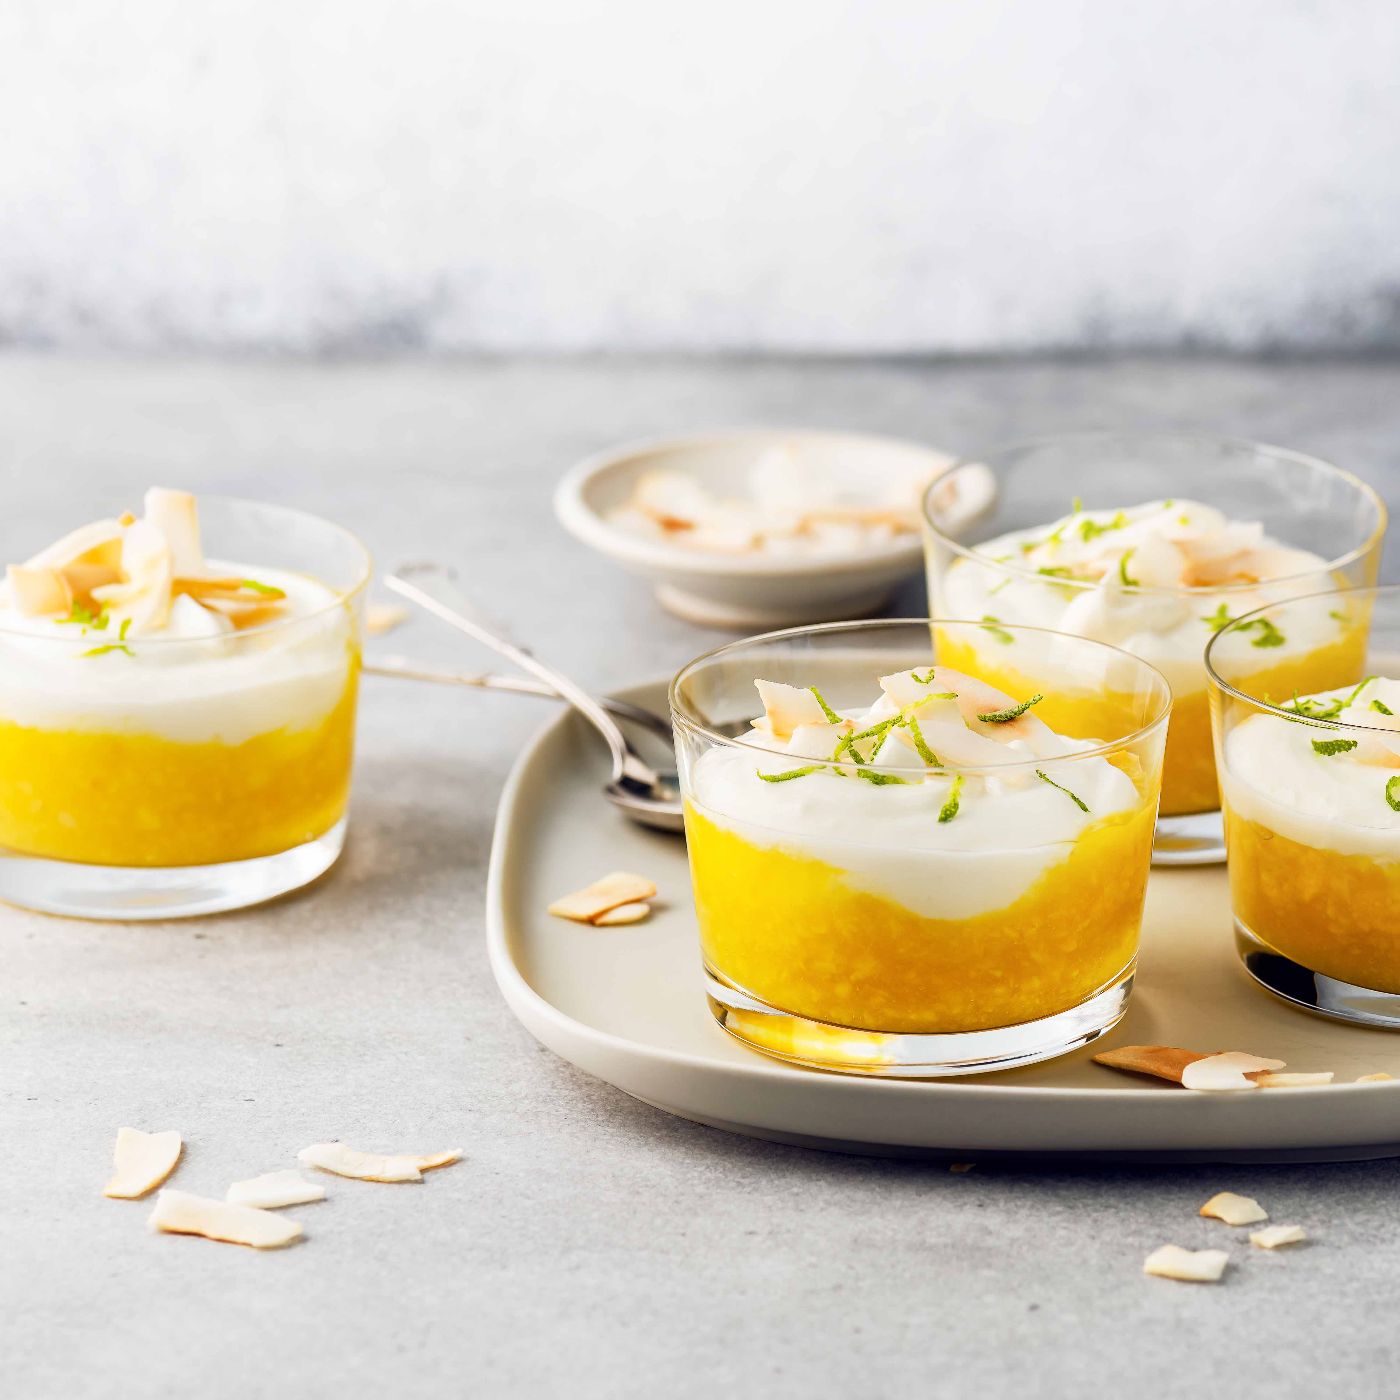 Vegetarian-fruit-cream-dessert-with-coconut-milk-curd-and-mango-puree-in-glass-jars.-1370435551_6436x4597 square.jpg